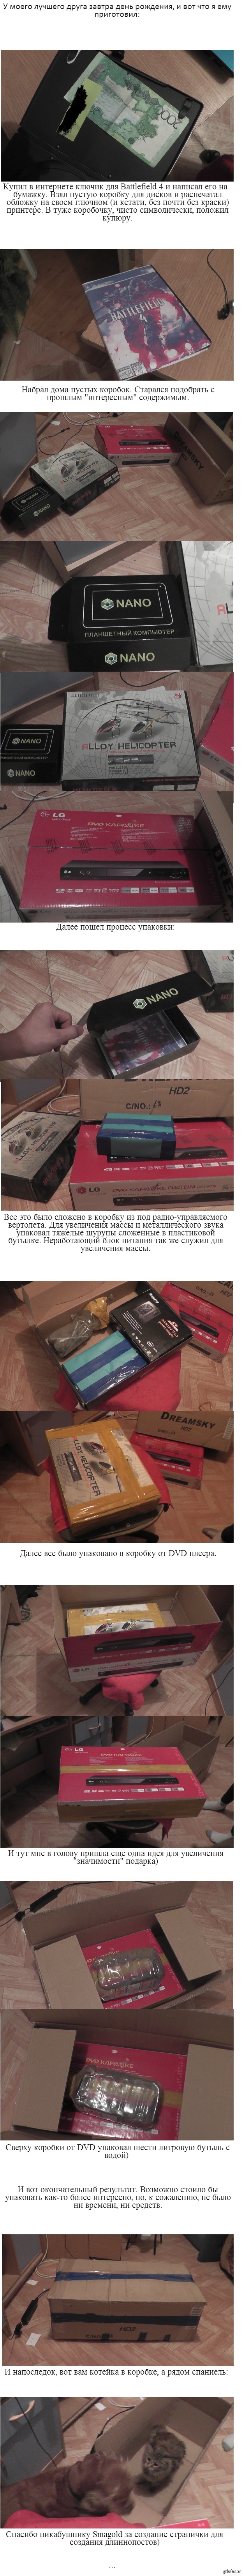 http://s.pikabu.ru/post_img/2013/11/19/11/1384880672_1033909850.jpg